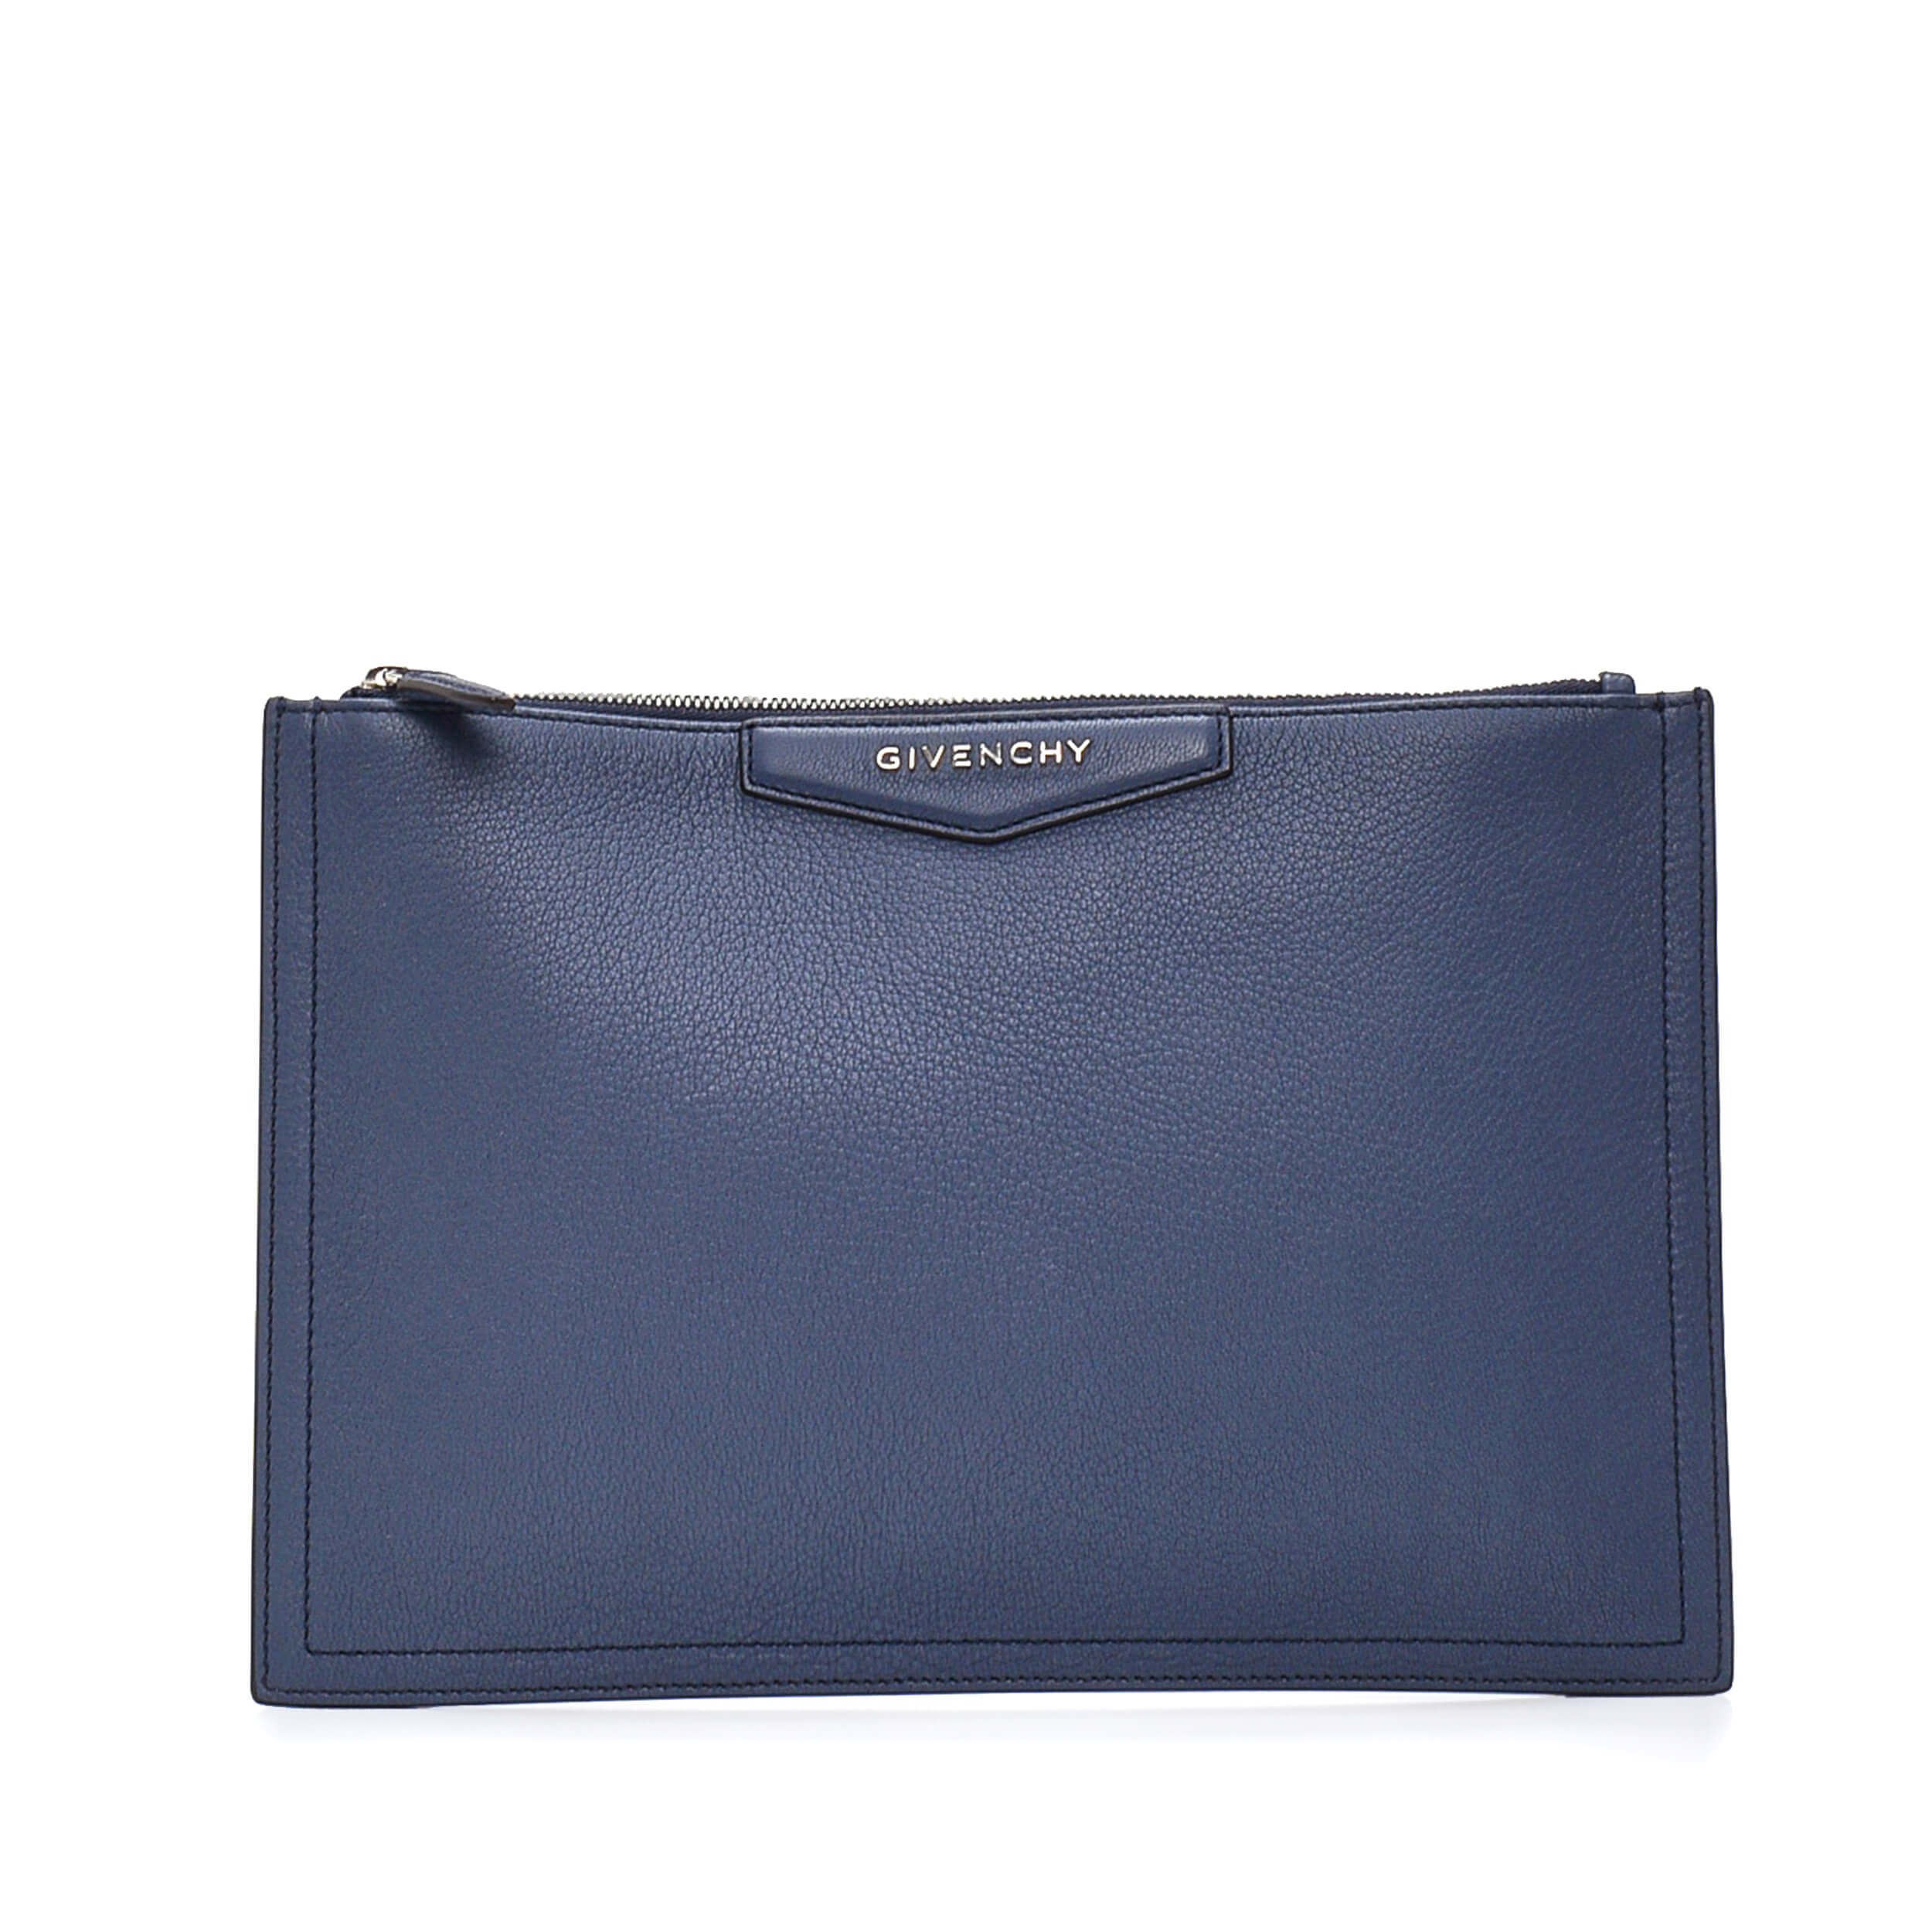 Givenchy - Navy Blue Leather Antigona Zipped Clutch II